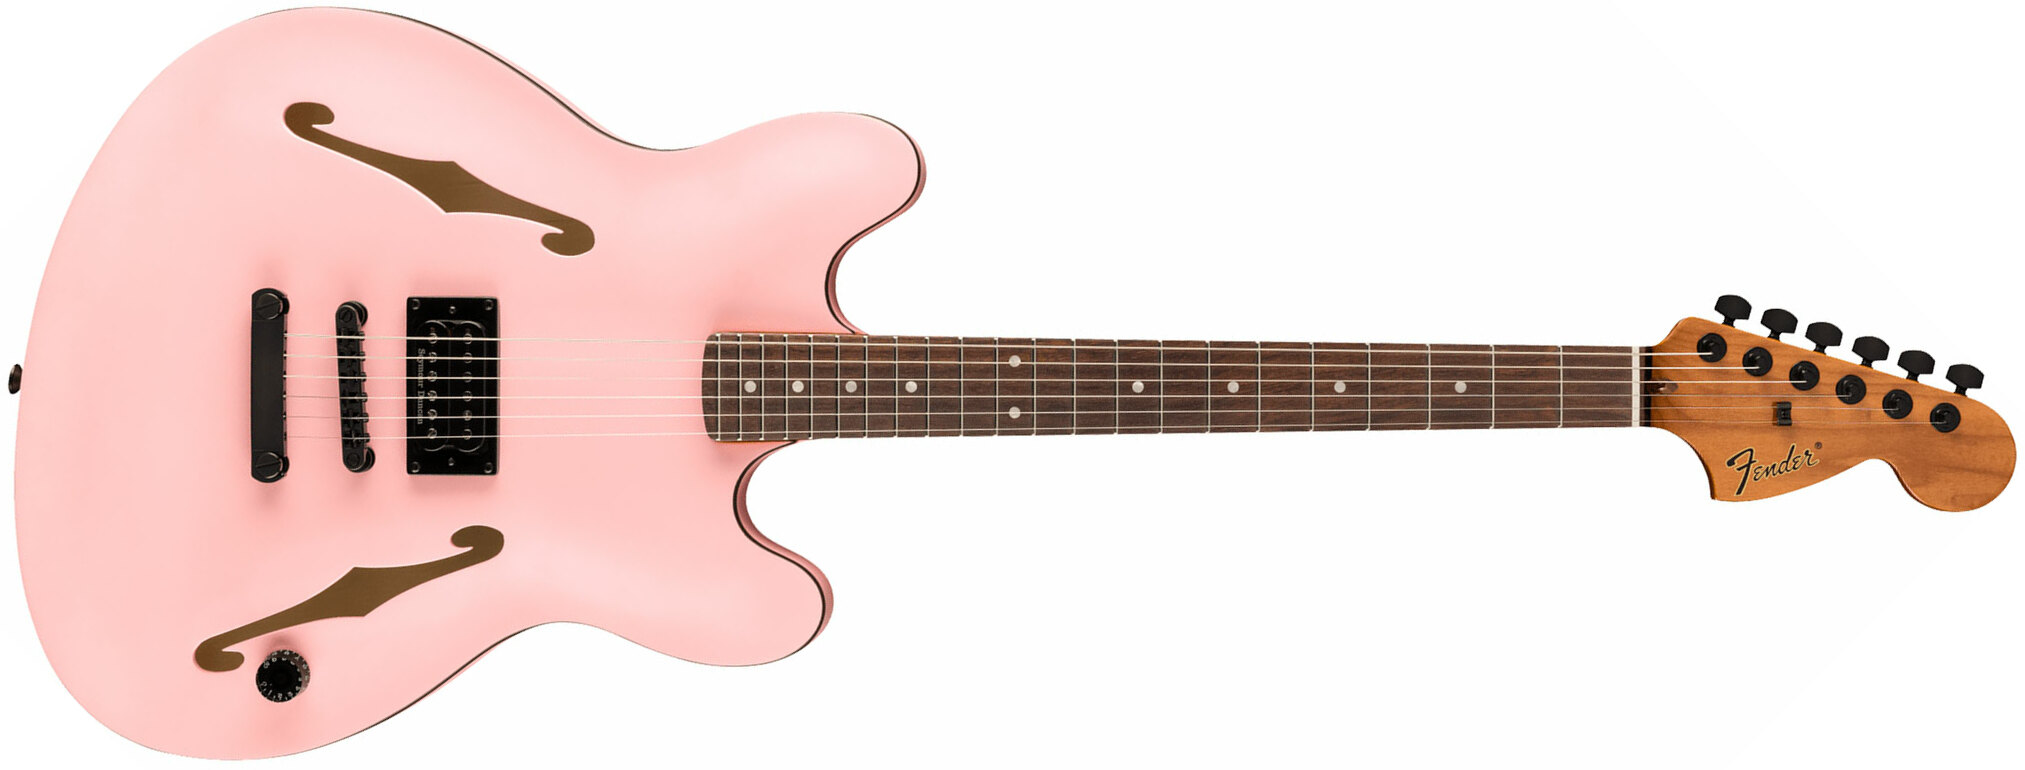 Fender Tom Delonge Starcaster Signature 1h Seymour Duncan Ht Rw - Satin Shell Pink - Semi hollow elektriche gitaar - Main picture